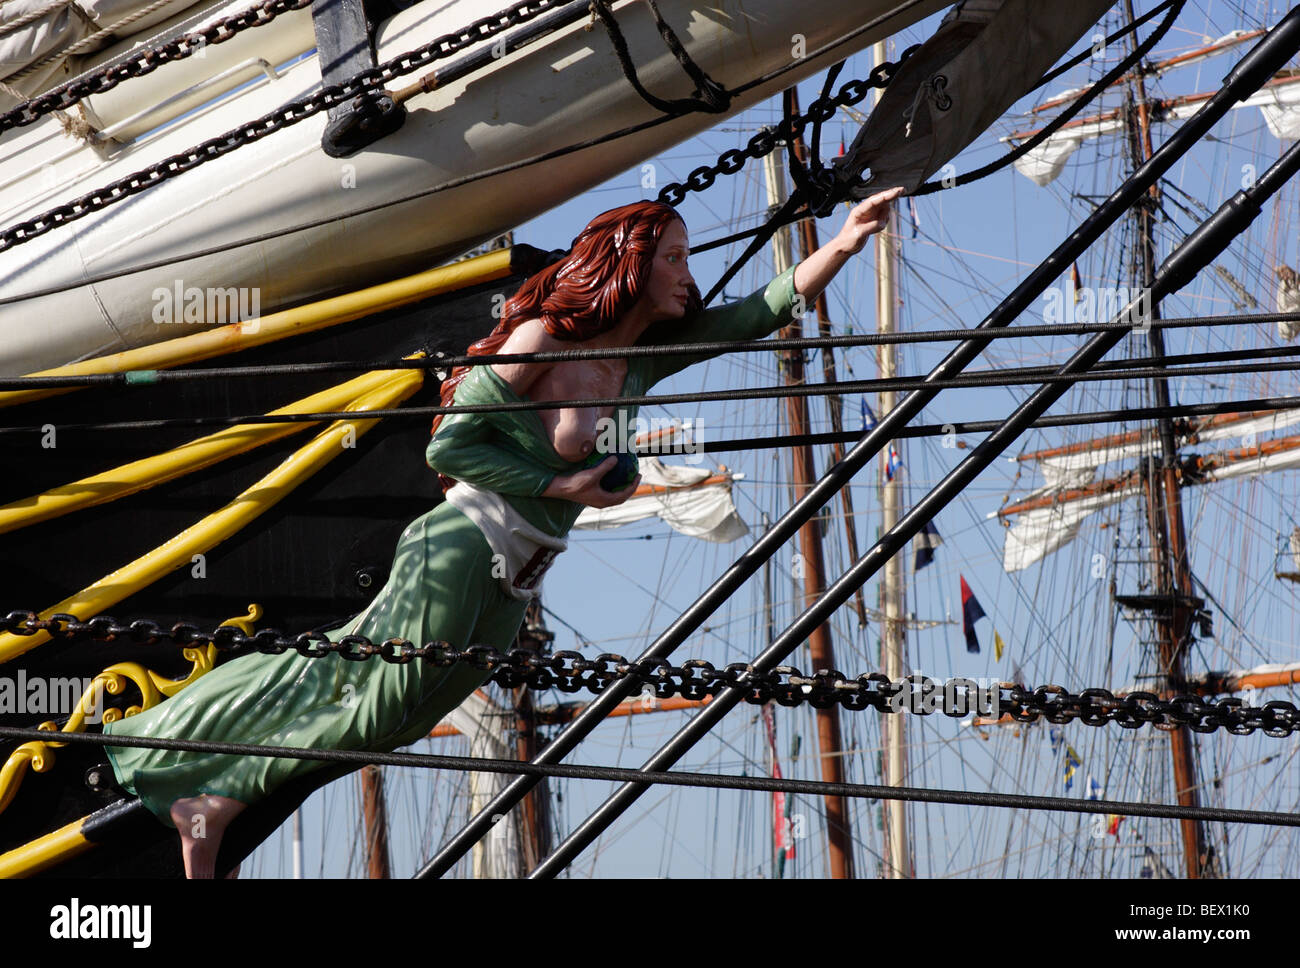 Figurehead of sailing ship Stad Amsterdam Stock Photo